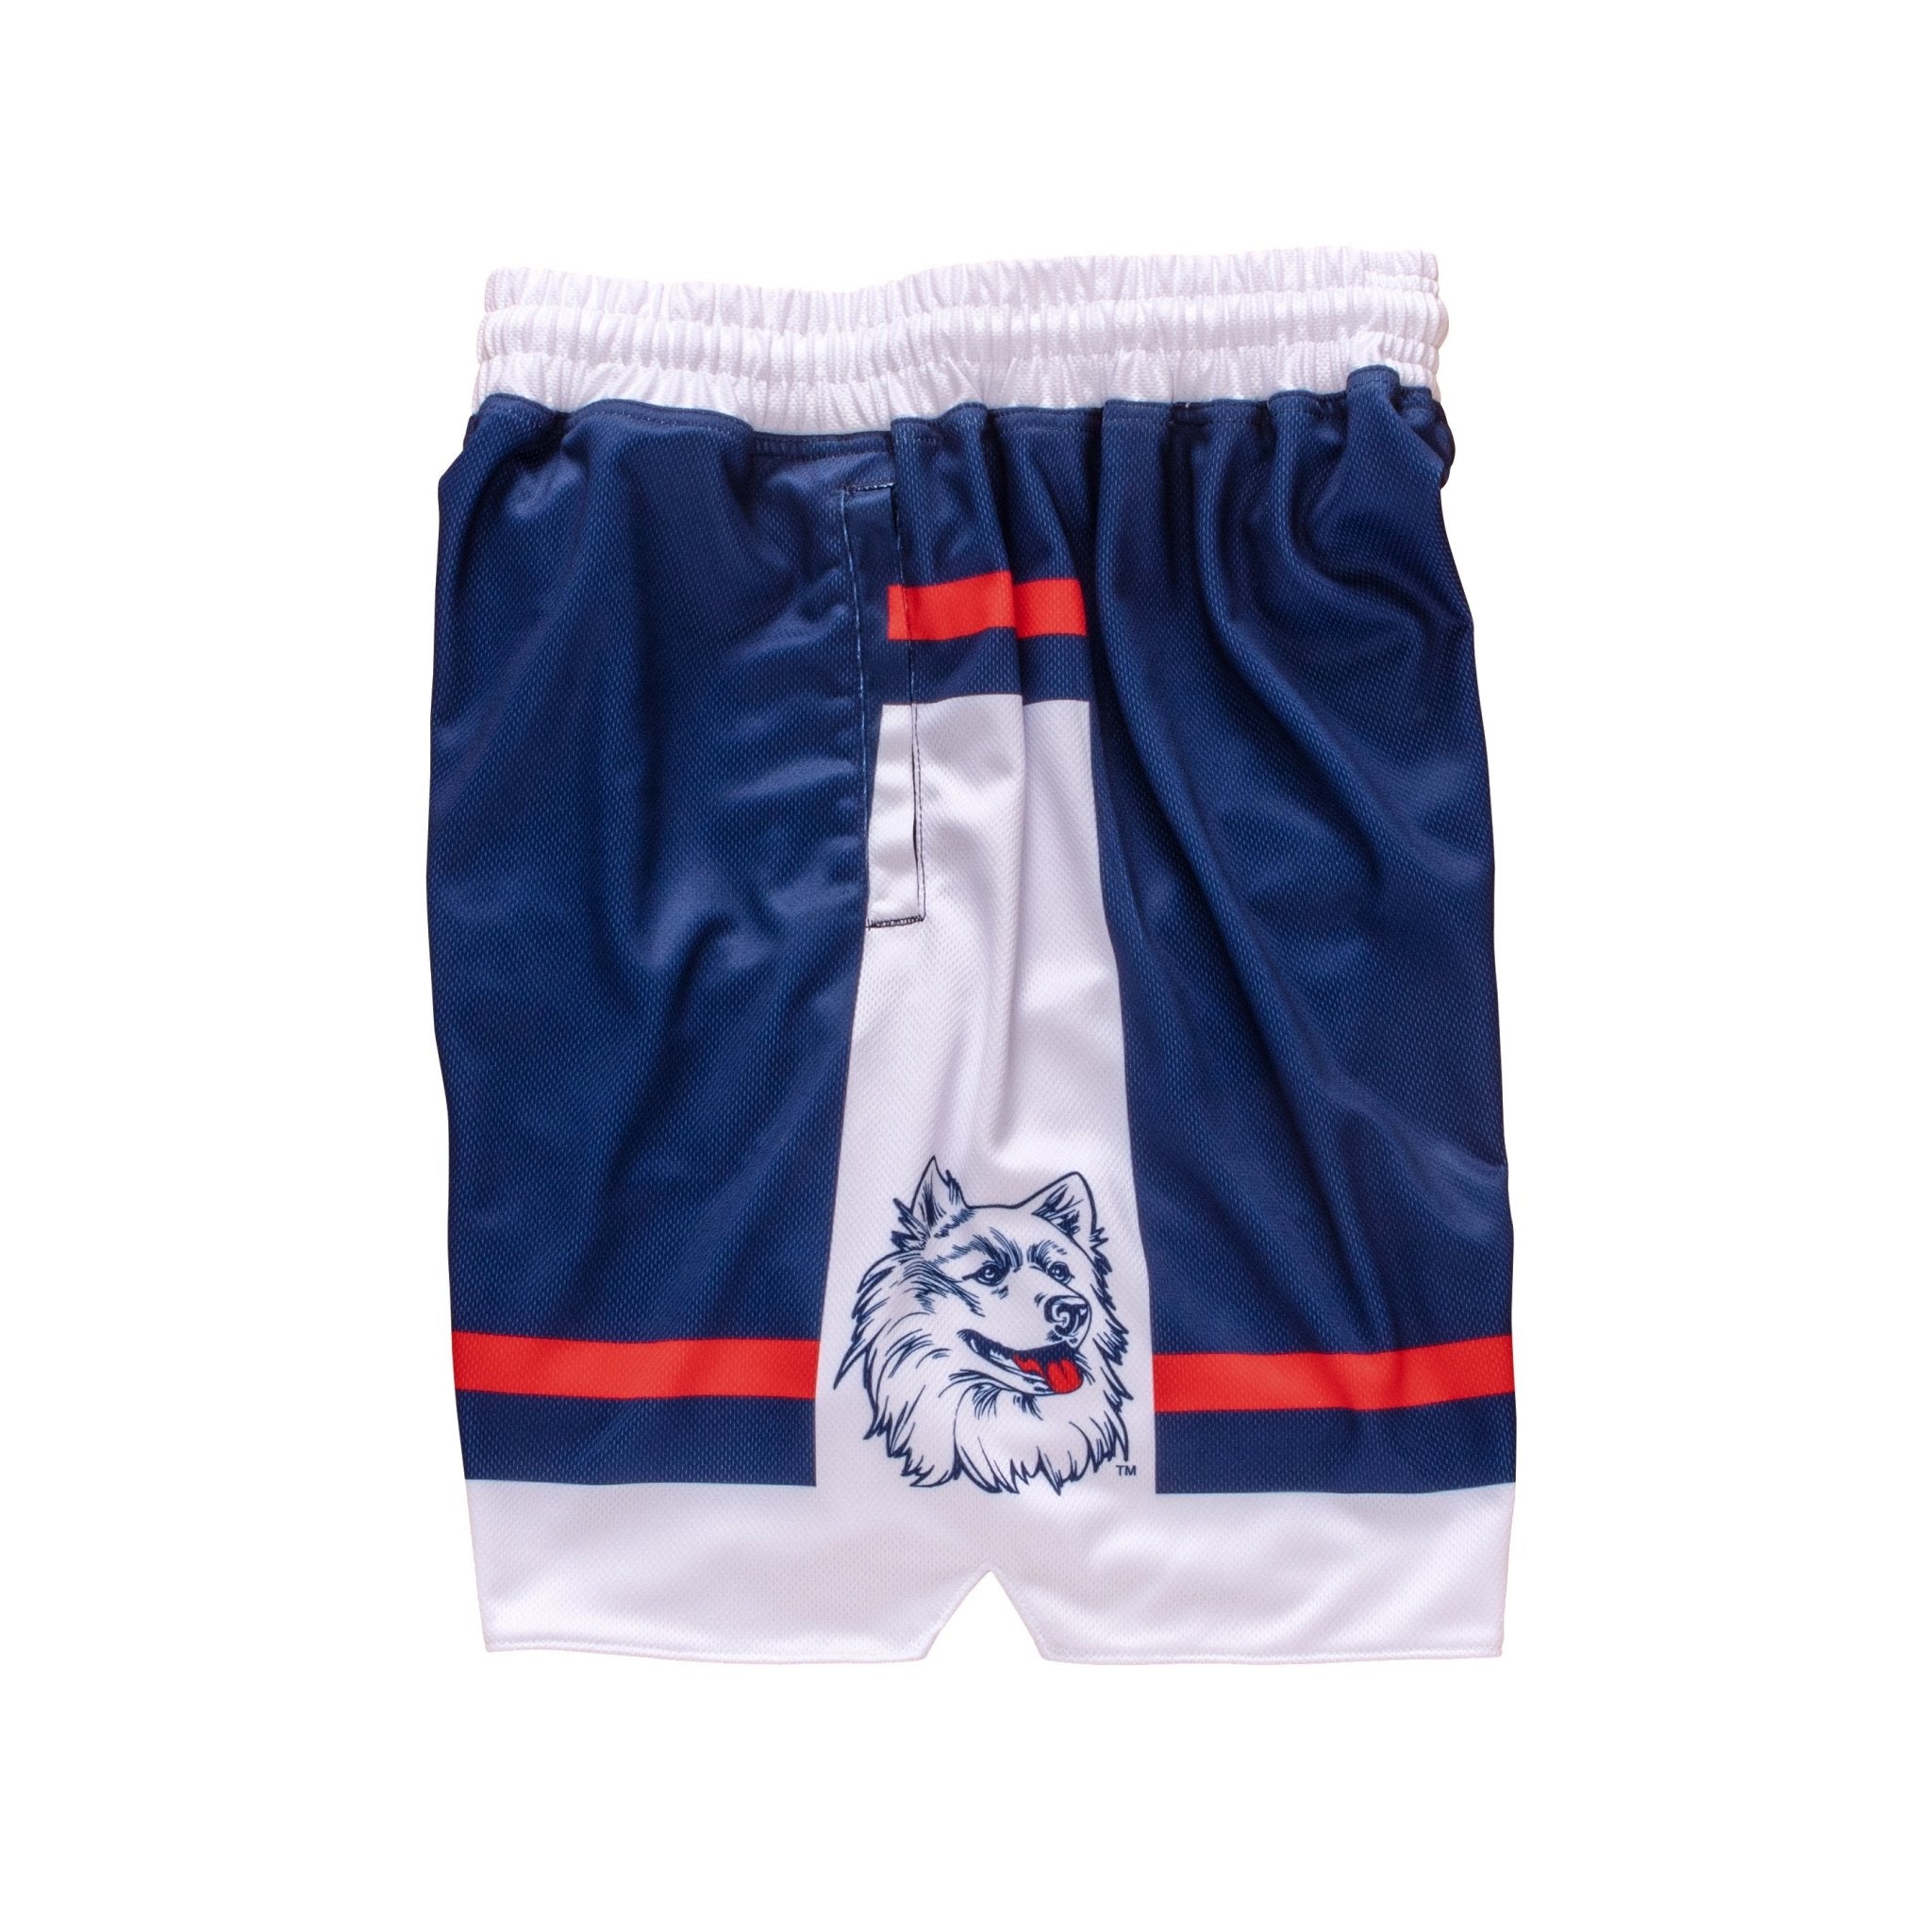 UConn Huskies 1998-1999 Retro Shorts - SLAM